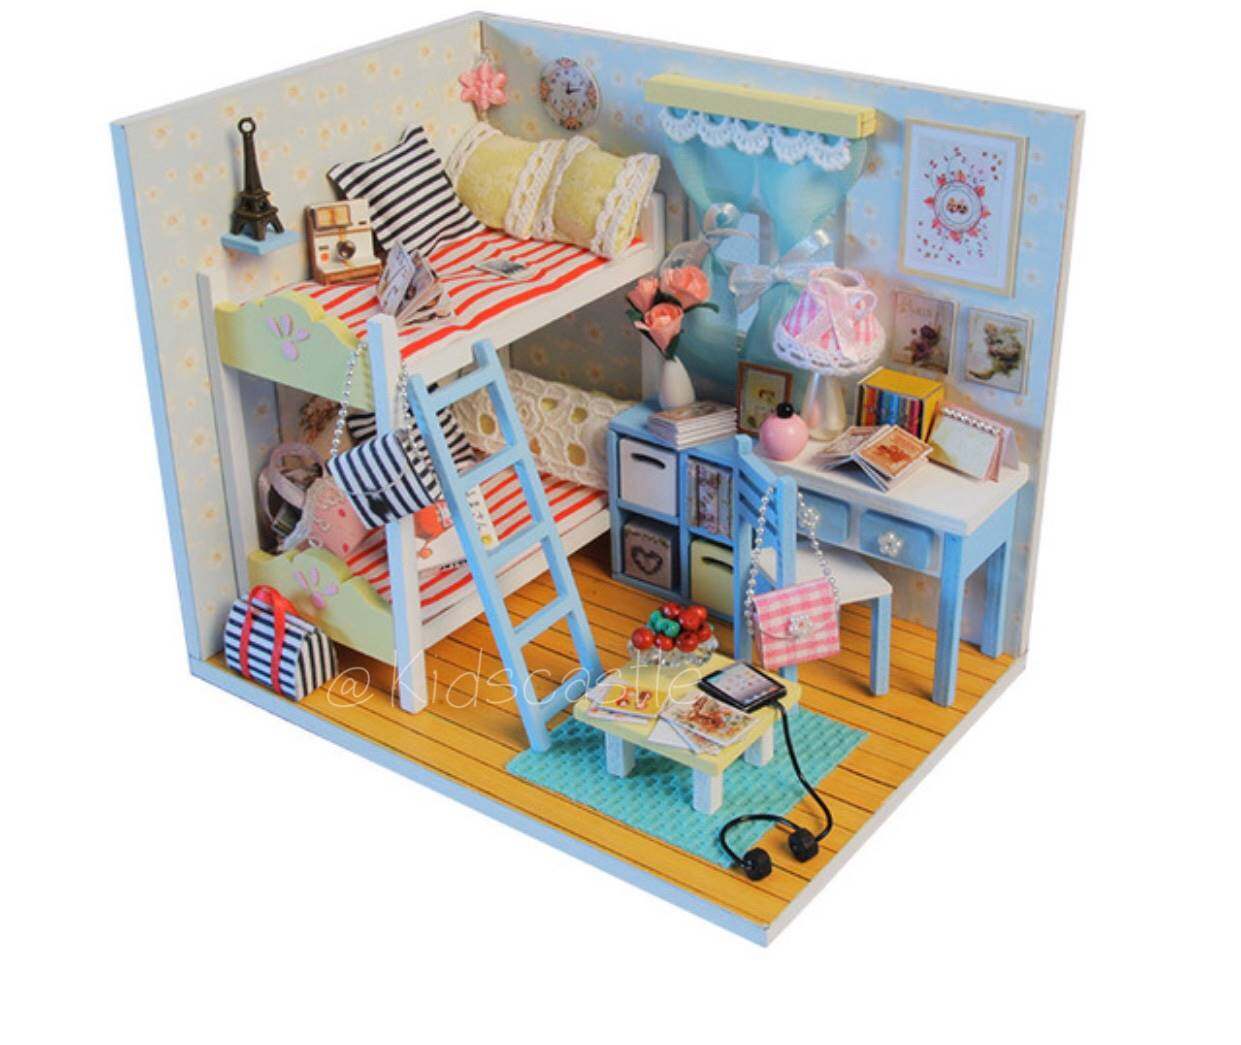 The Woody Toys โมเดลบ้านไม้ของเล่น DIY ประดับตกแต่งเฟอร์นิเจอร์ บ้านตุ๊กตา แถมฝาครอบกันฝุ่น